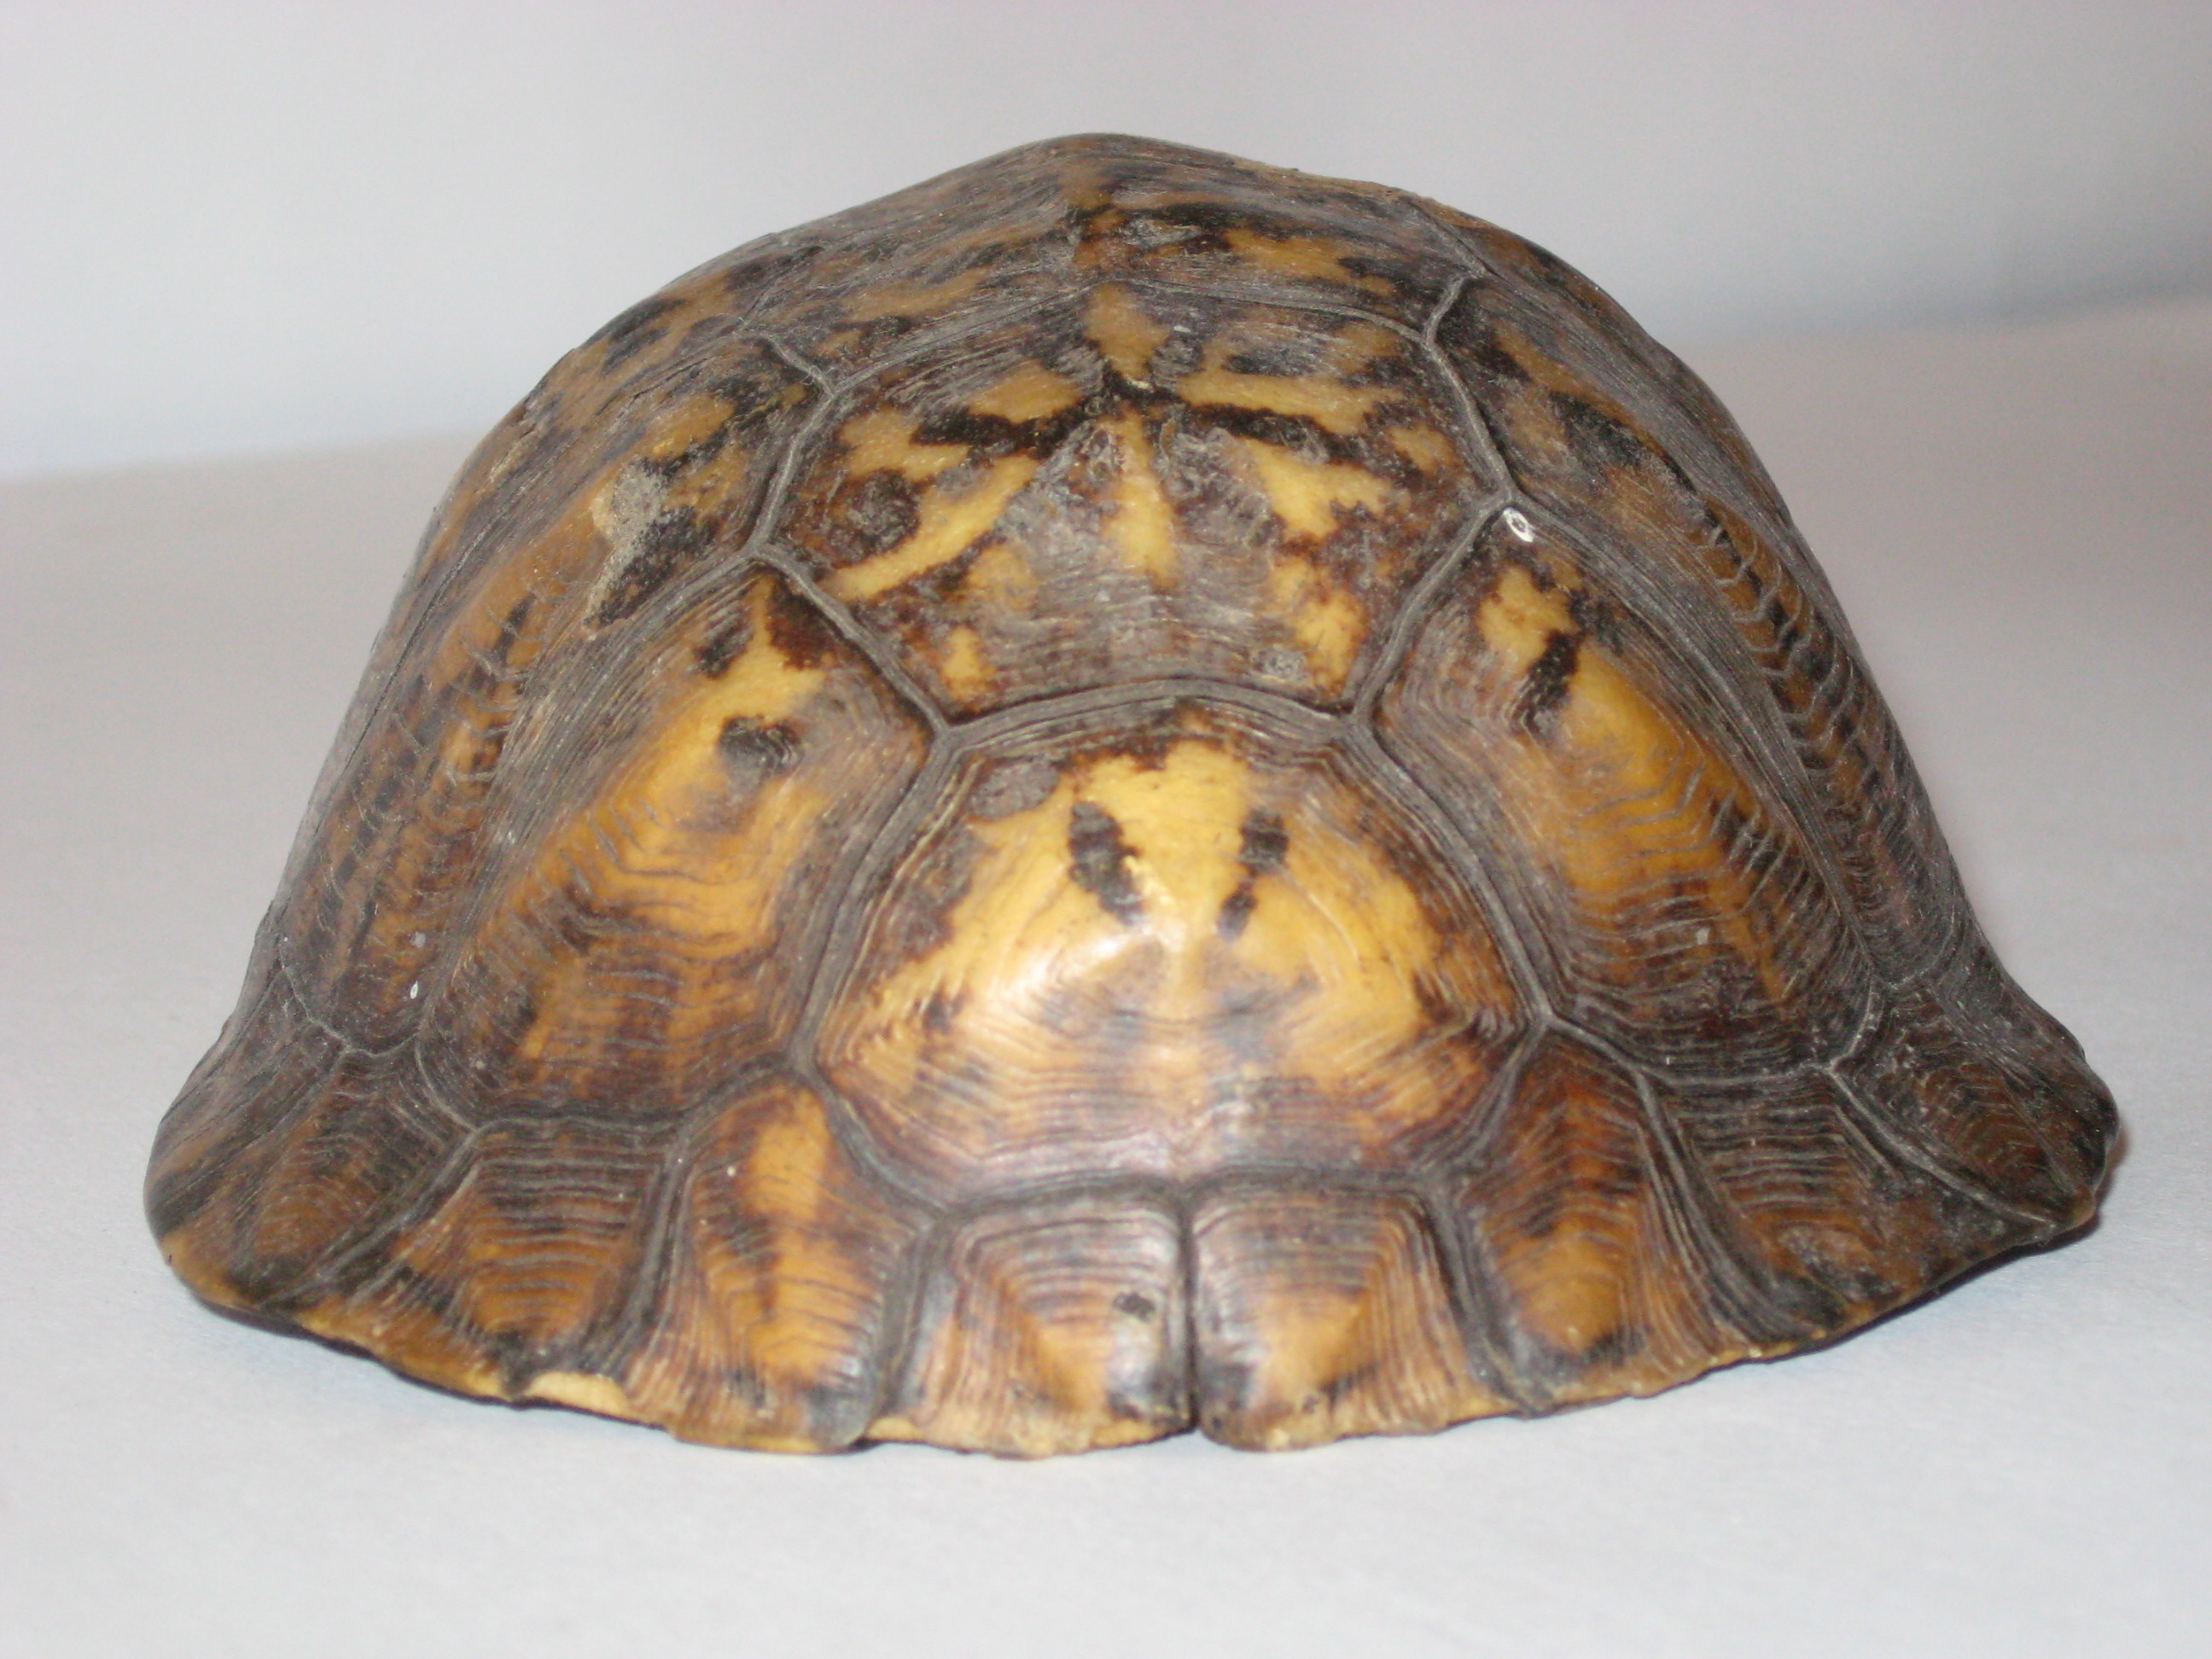 2592x1944 ... Tortoise Shell 2 by markopolio-stock